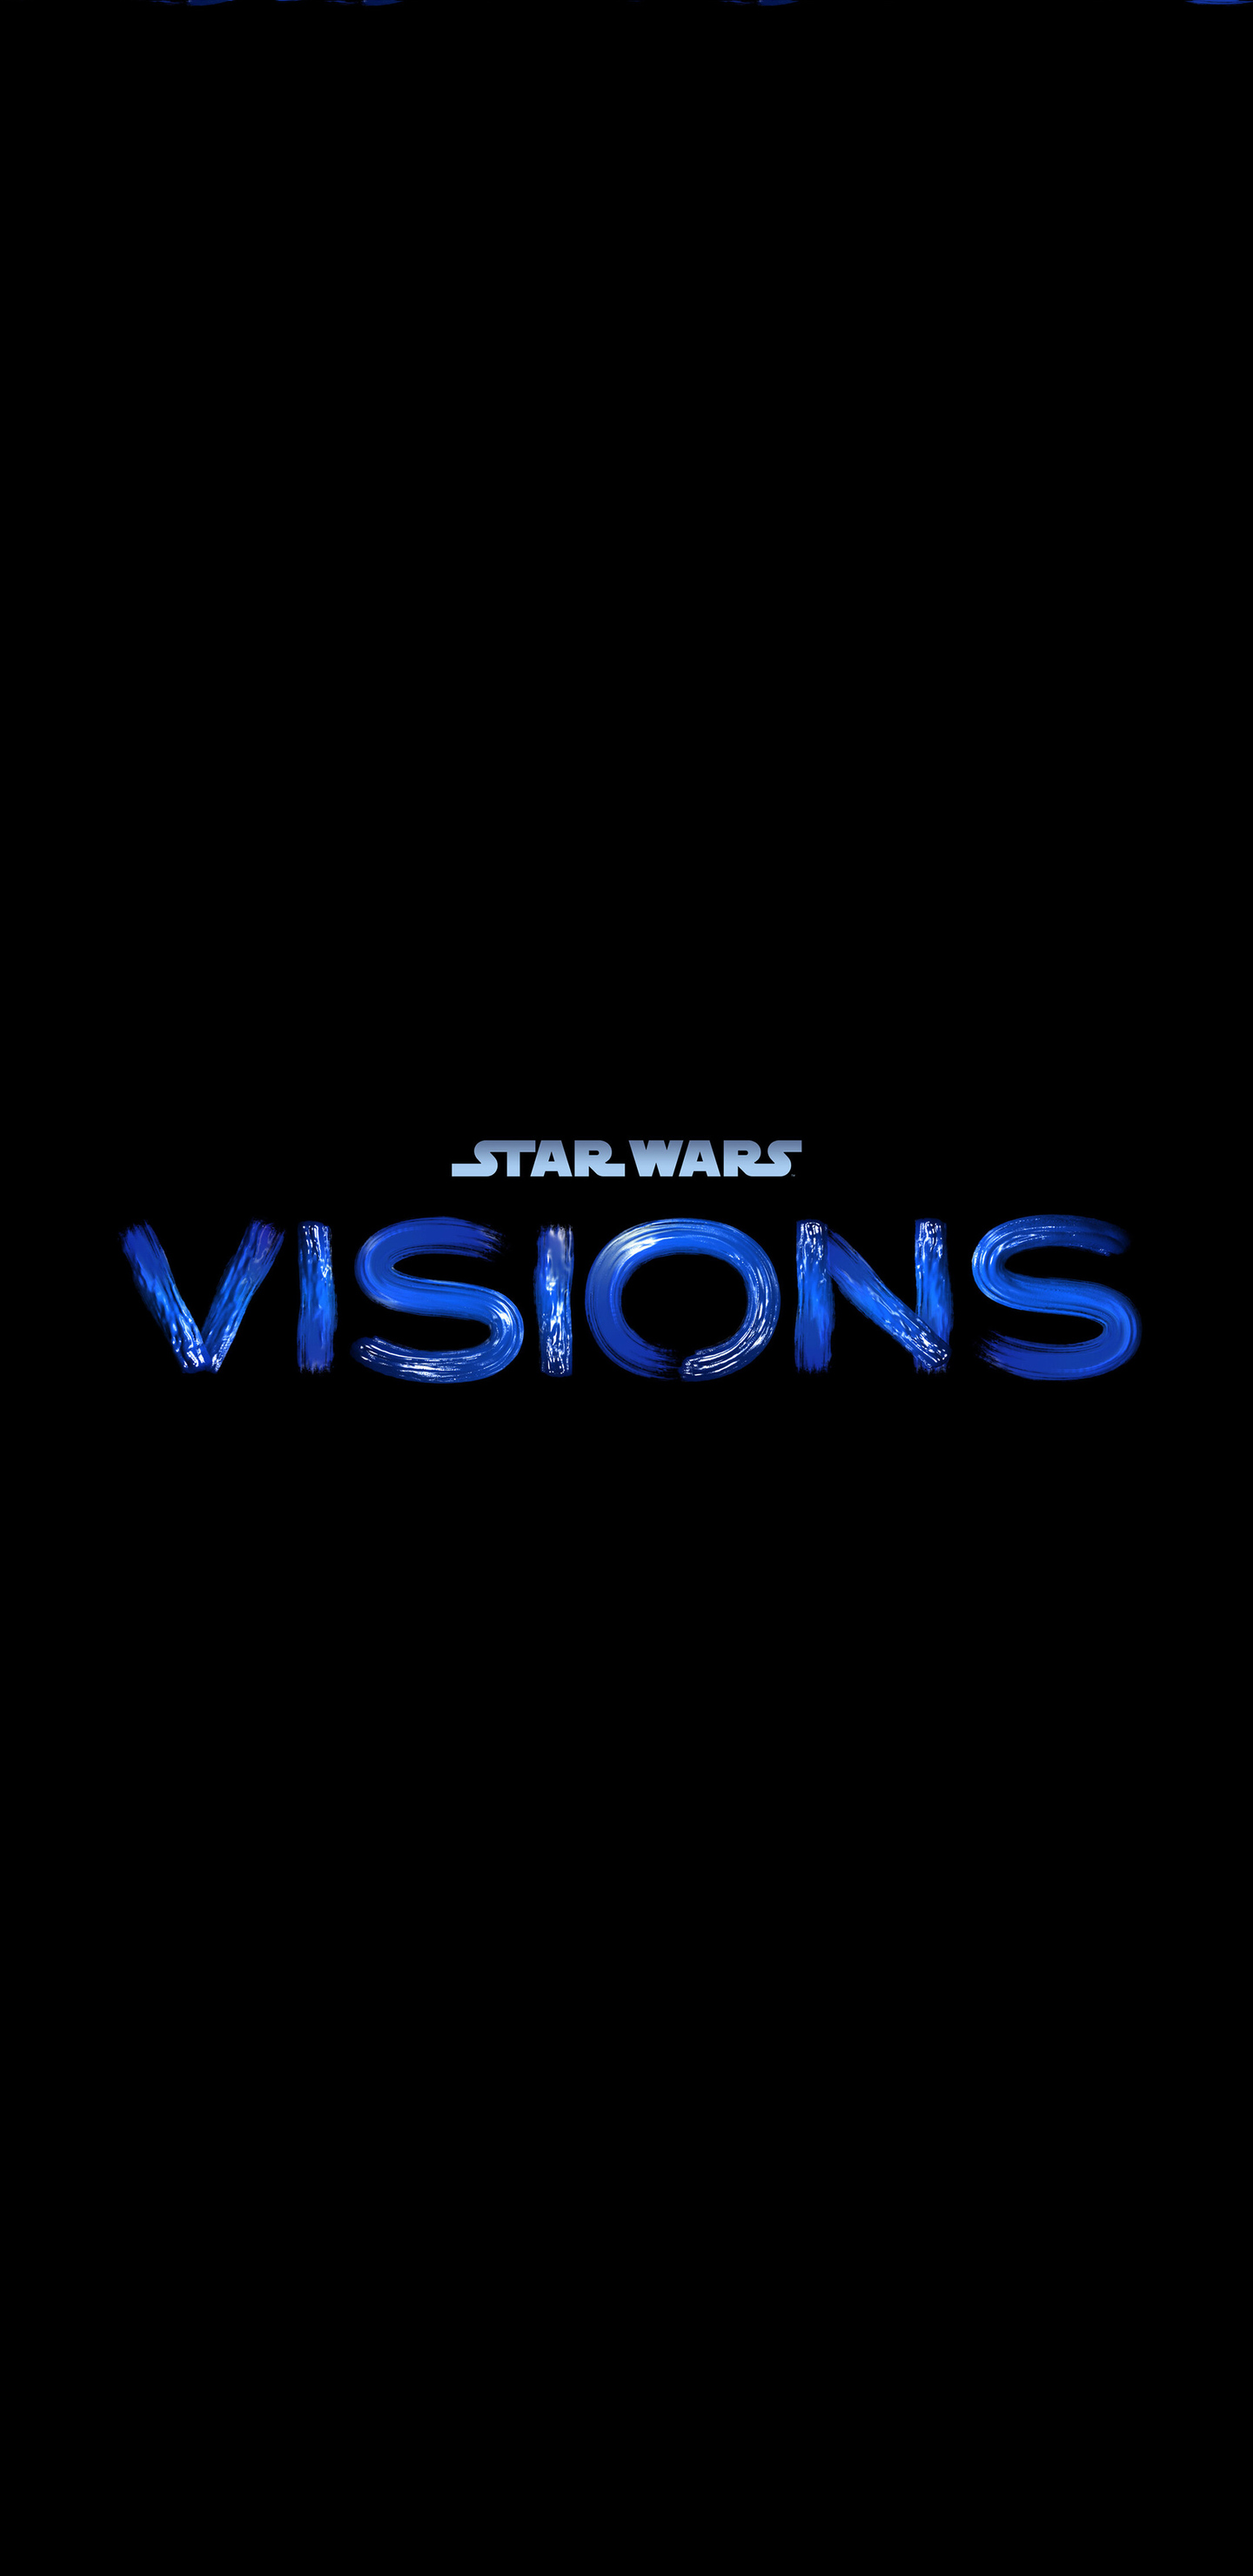 Star Wars Visions Wallpapers